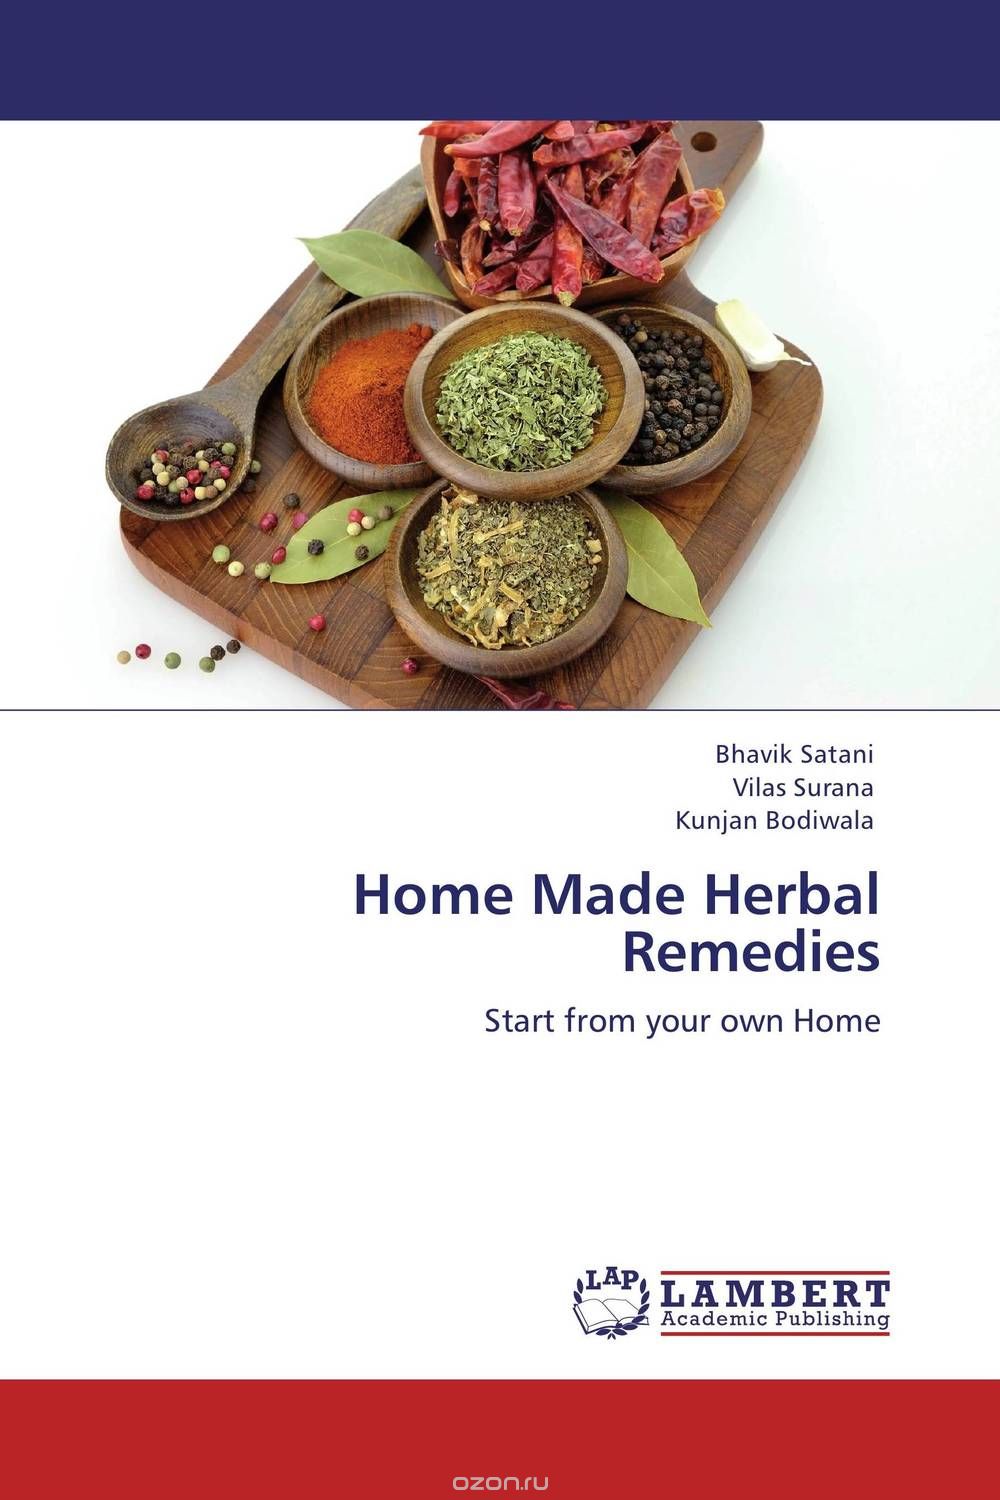 Скачать книгу "Home Made Herbal Remedies"